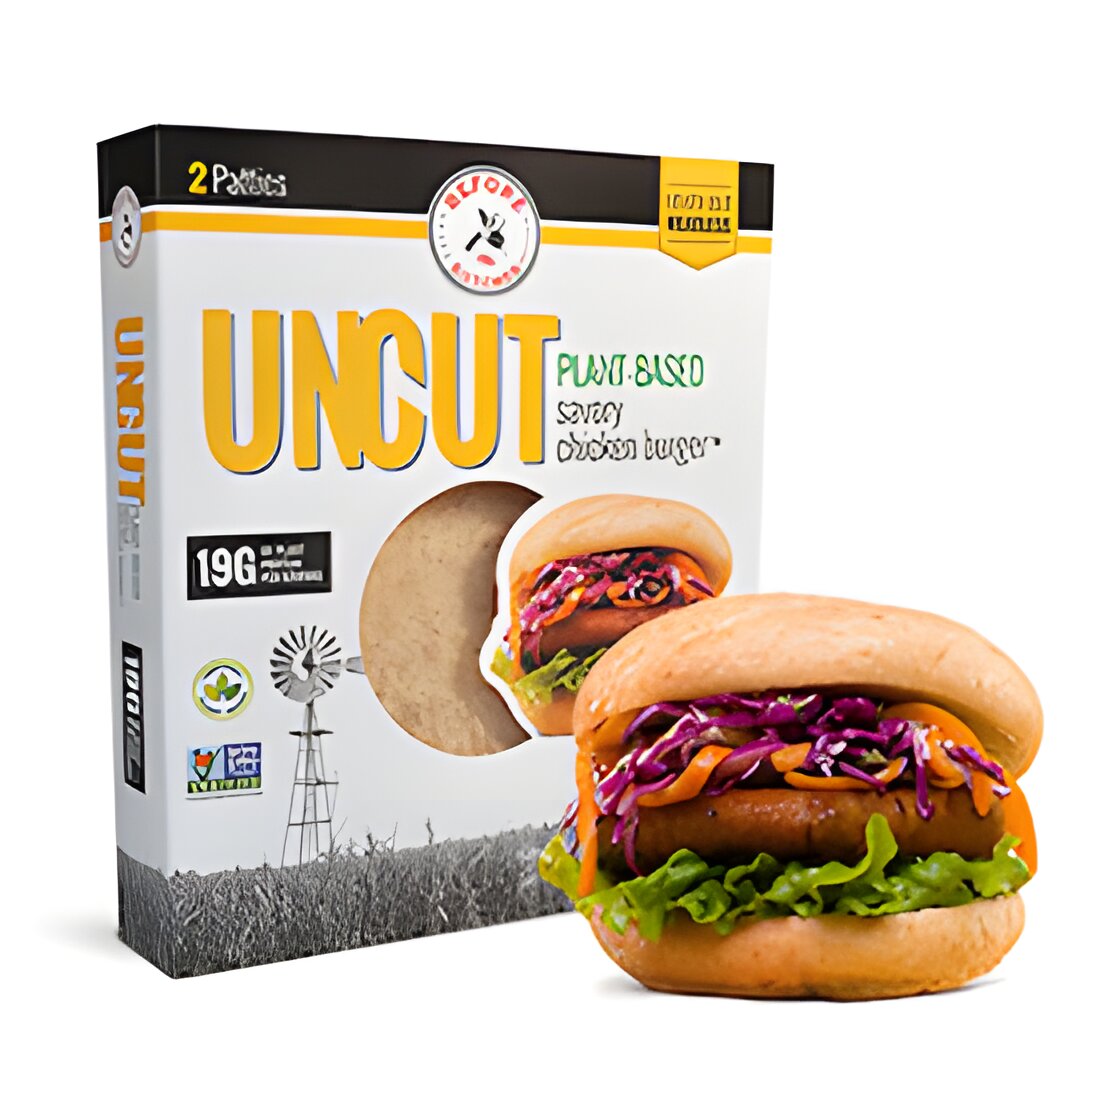 Free Uncut Plant-Based Savory Chicken Burger